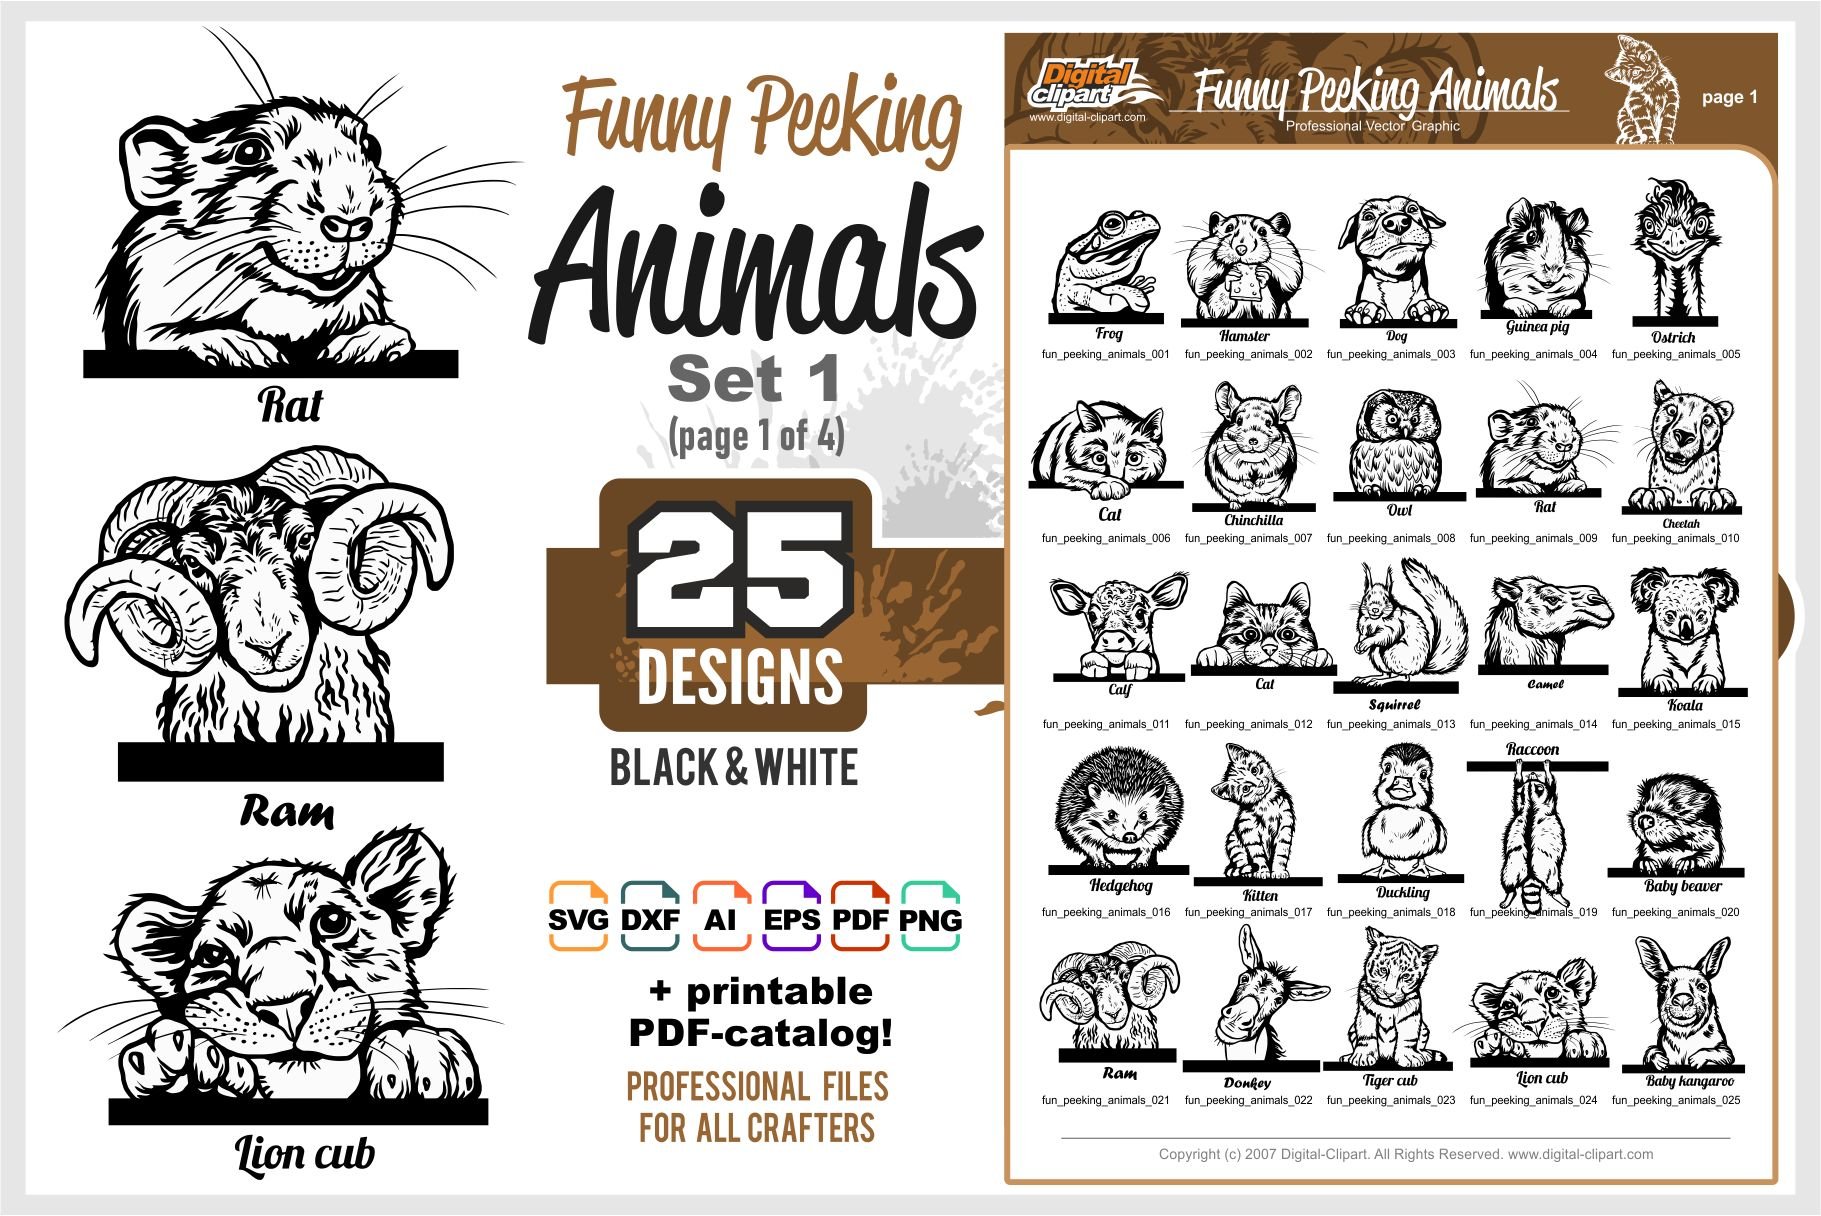 Funny Peeking Animals - 25 vector im cover image.